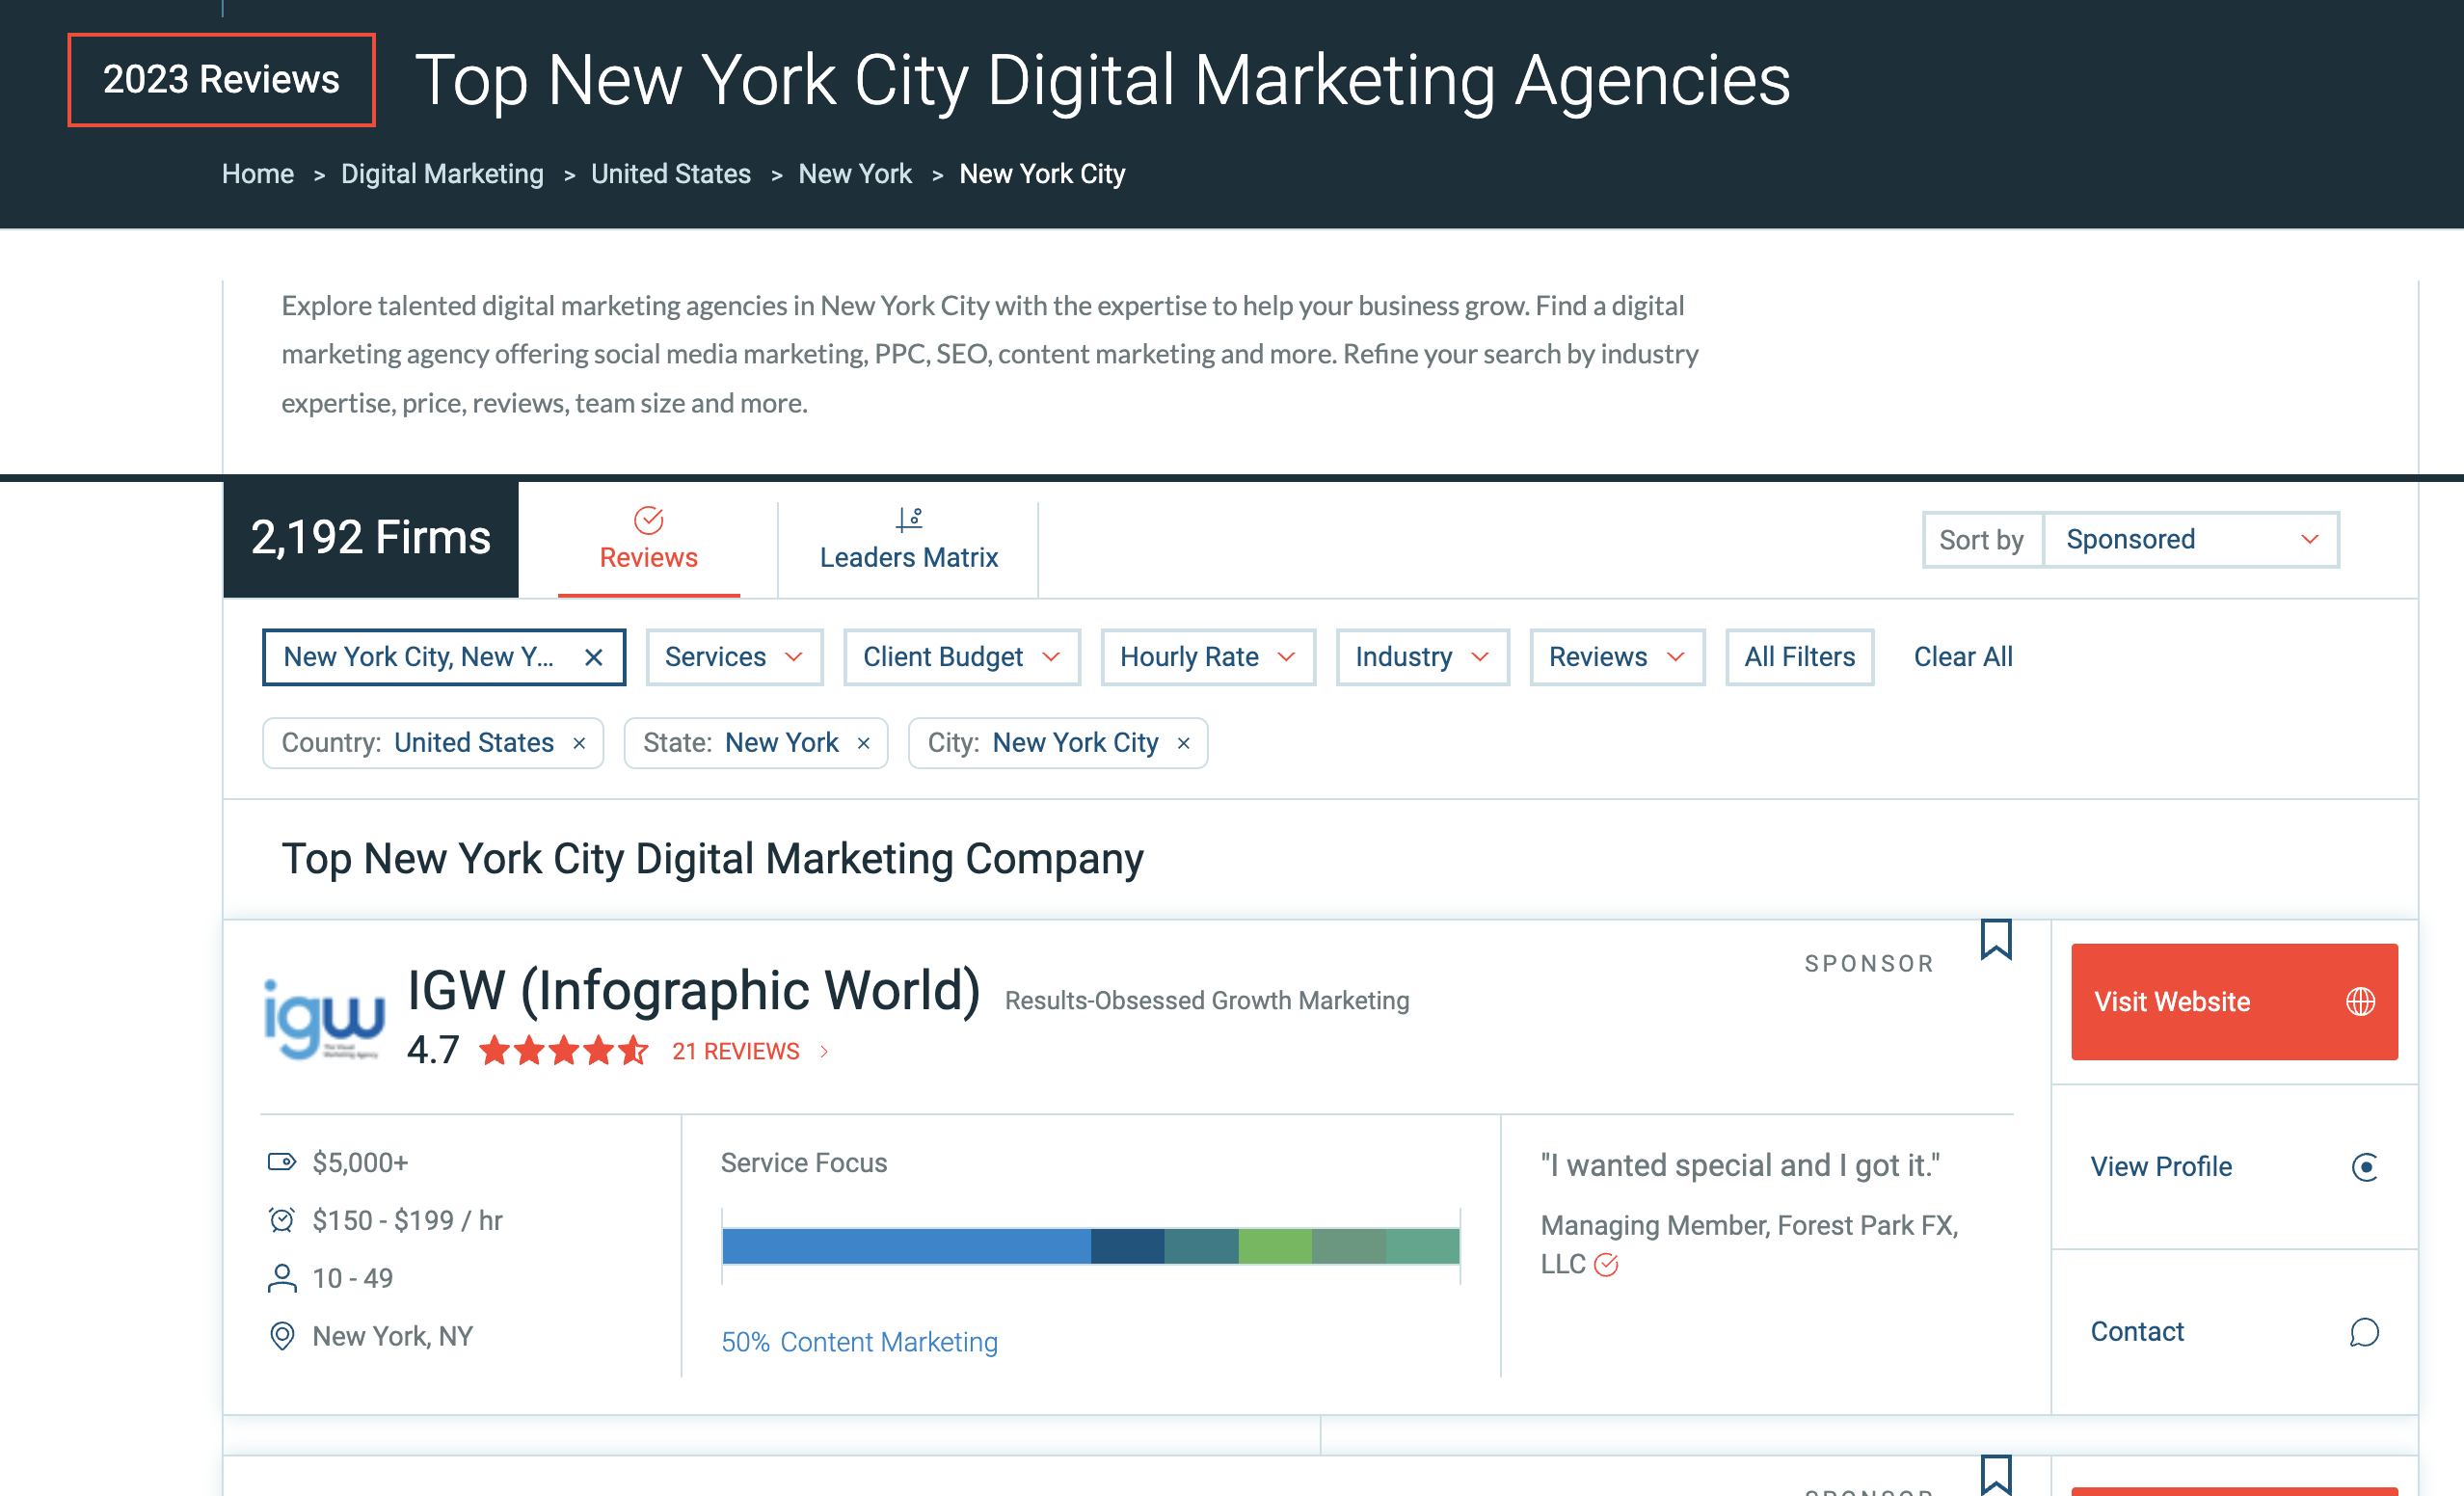 IGW #1 ranked New York digital marketing agency